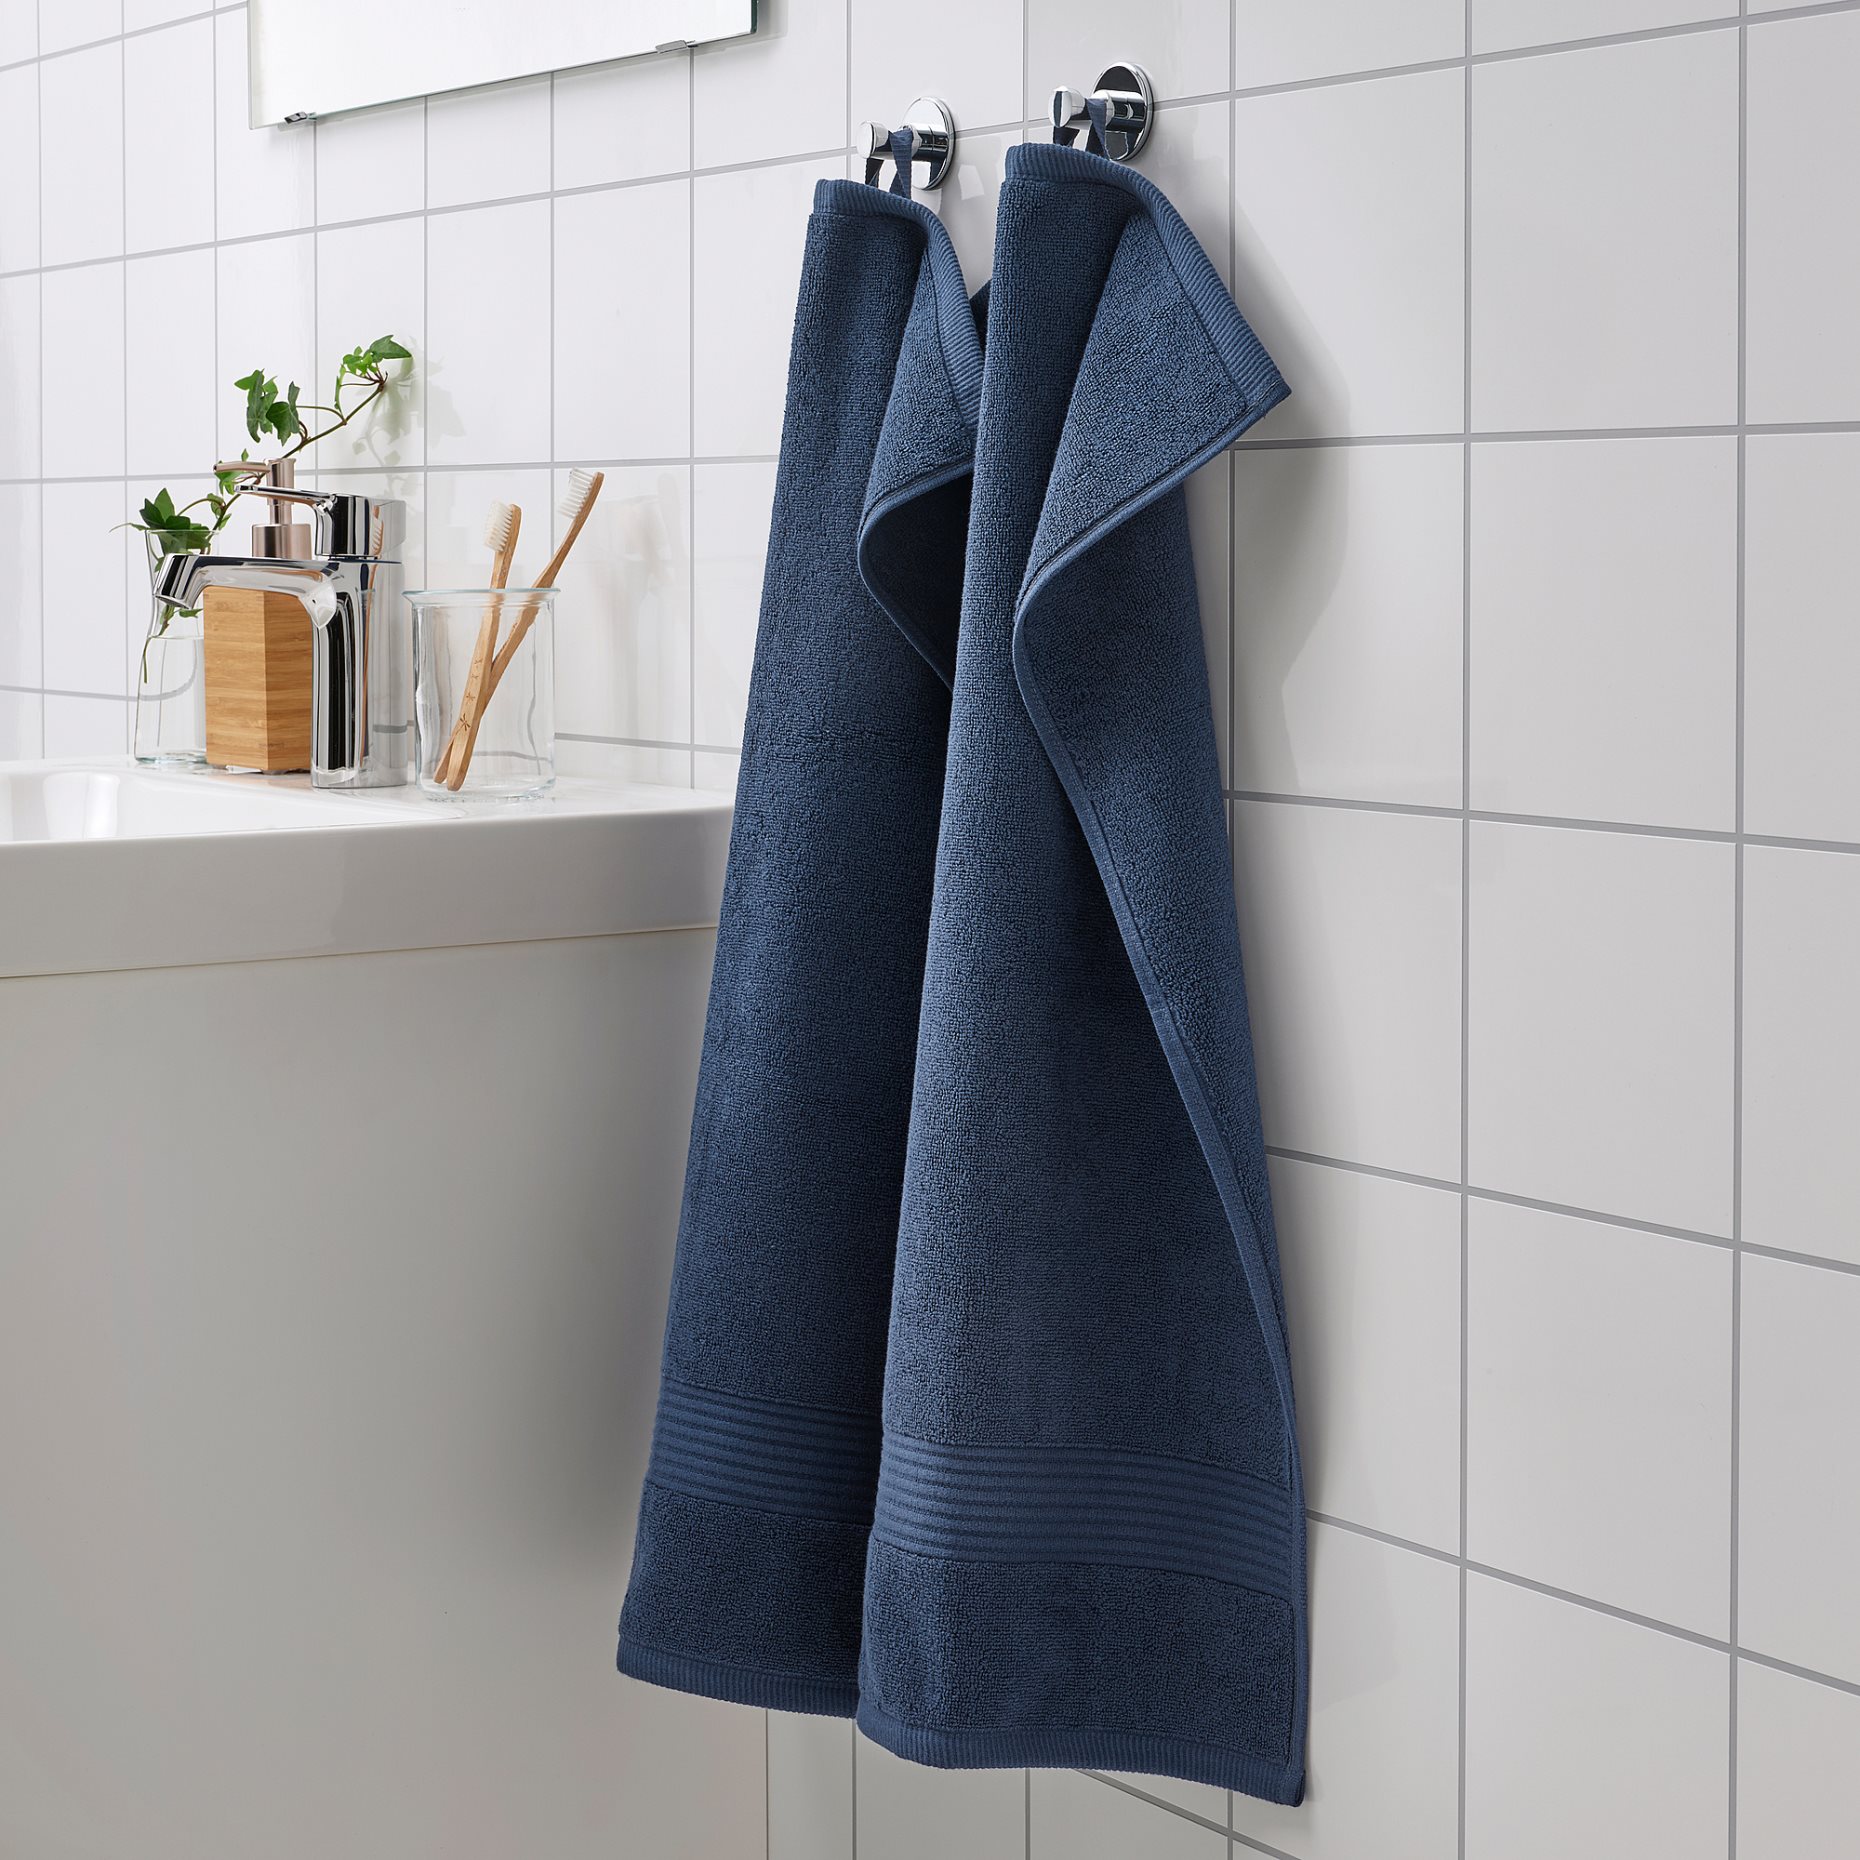 FREDRIKSJÖN, hand towel, 40x70 cm, 604.966.77